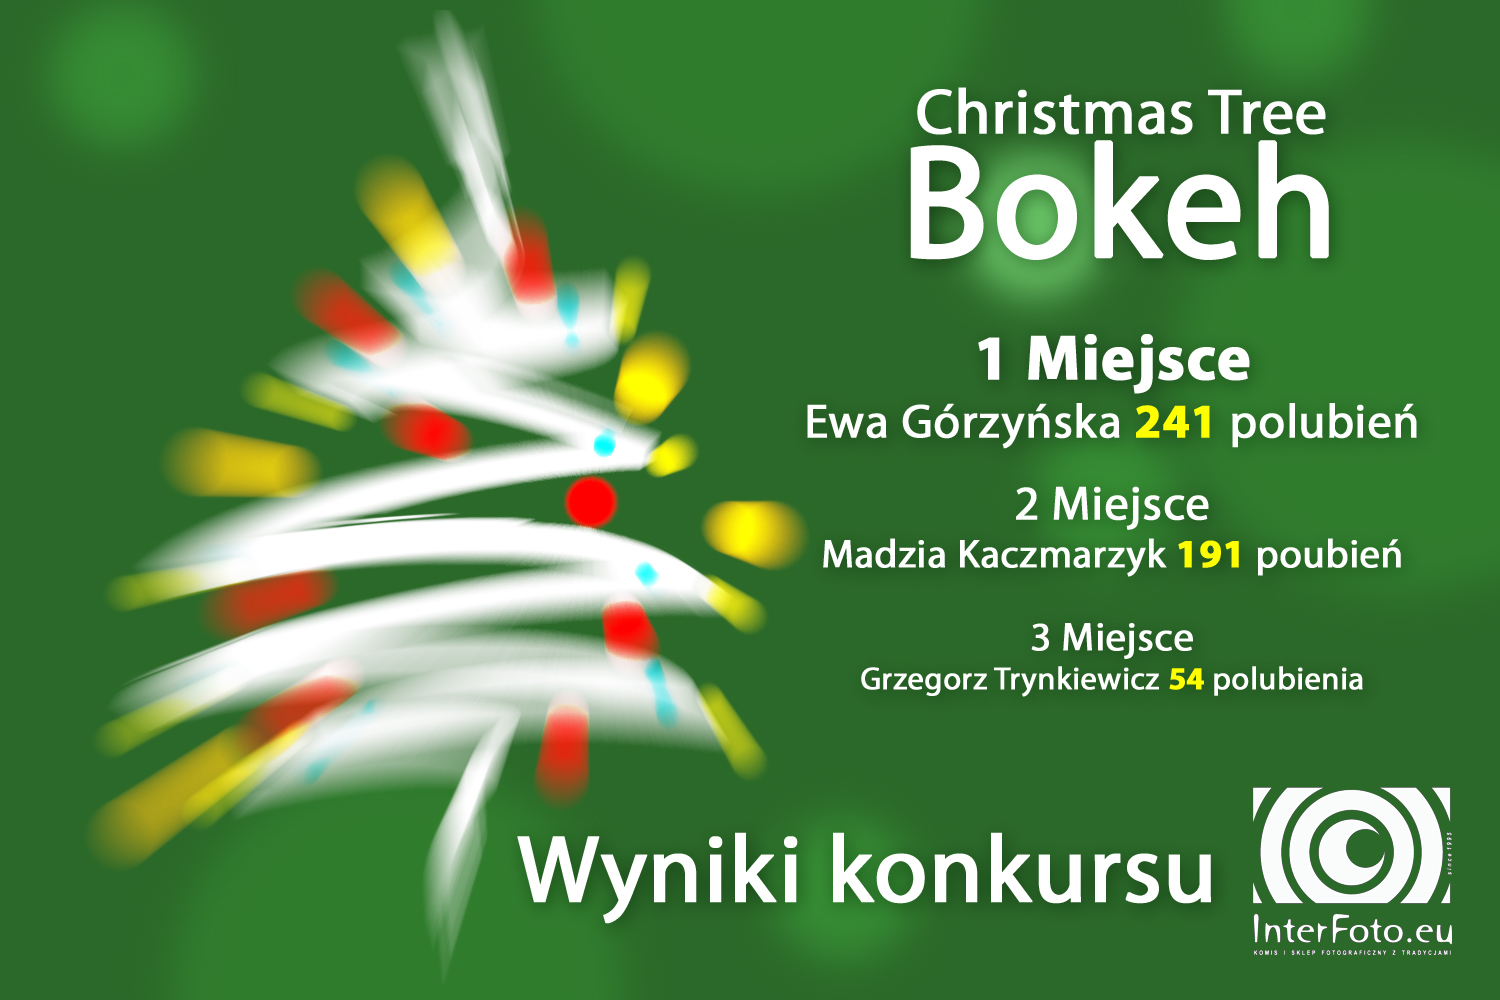 Wyniki konkursu "Christmas Tree Bokeh" 2021/2022